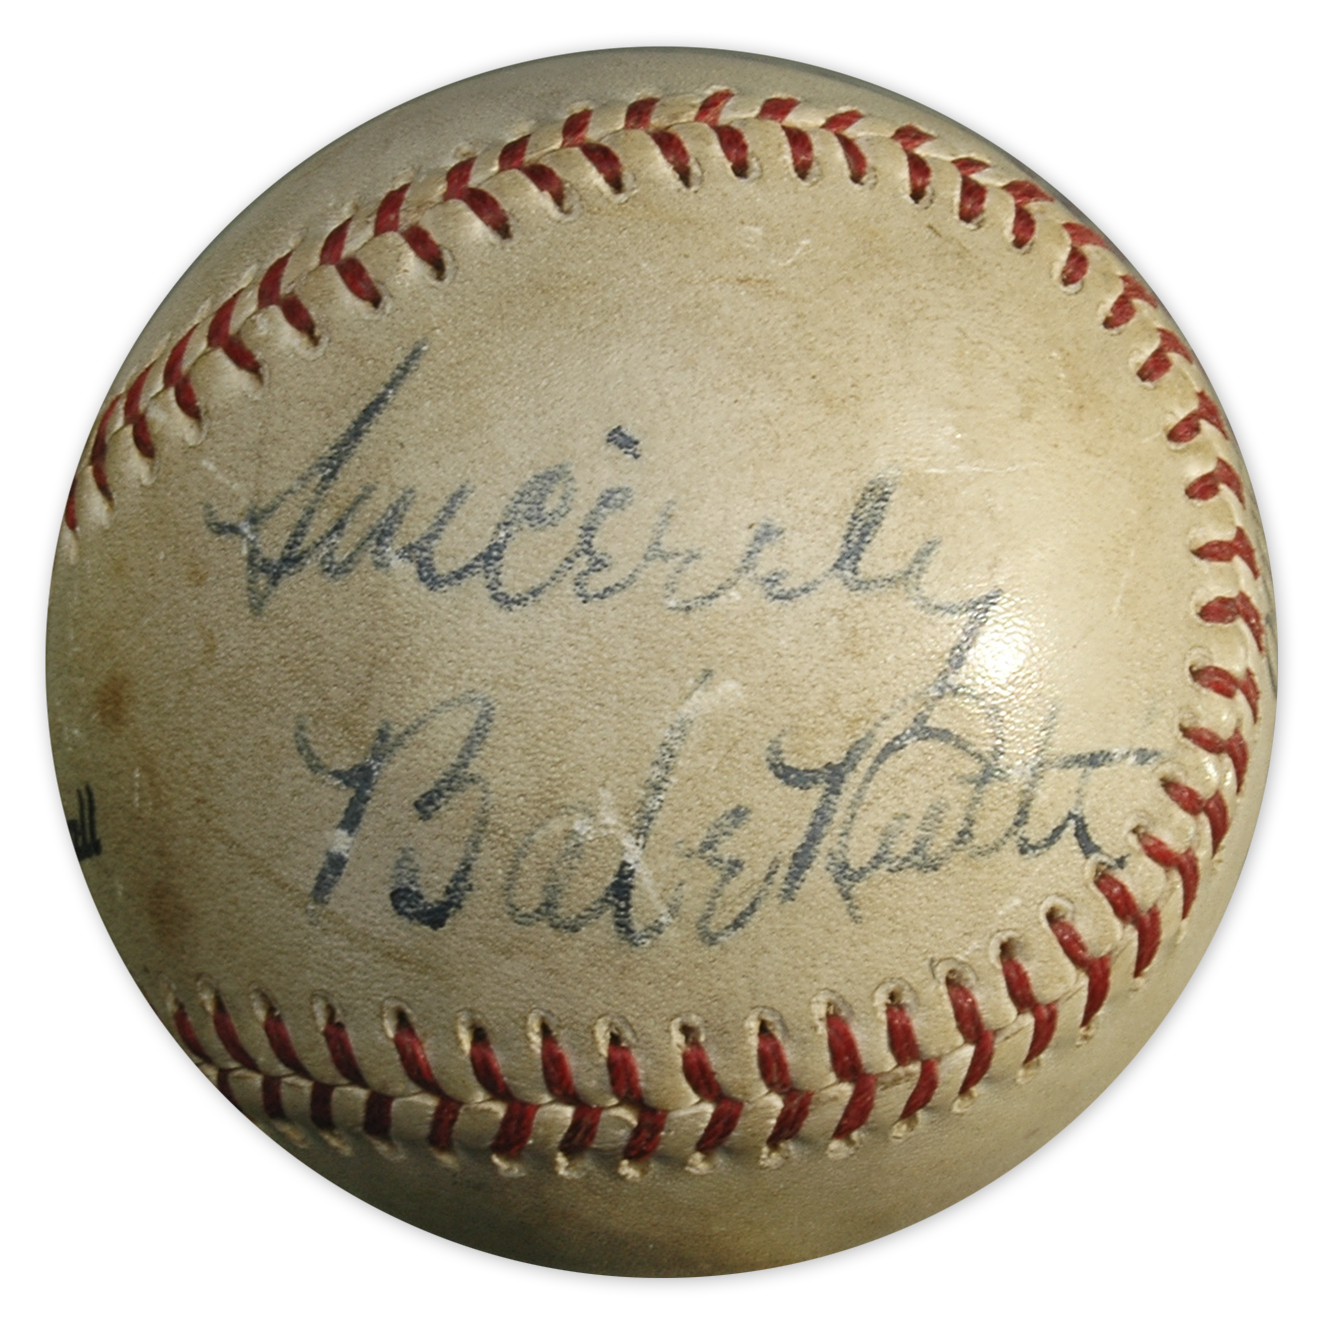 Mrs. Babe Ruth Signed Baseball - COA PSA/DNA